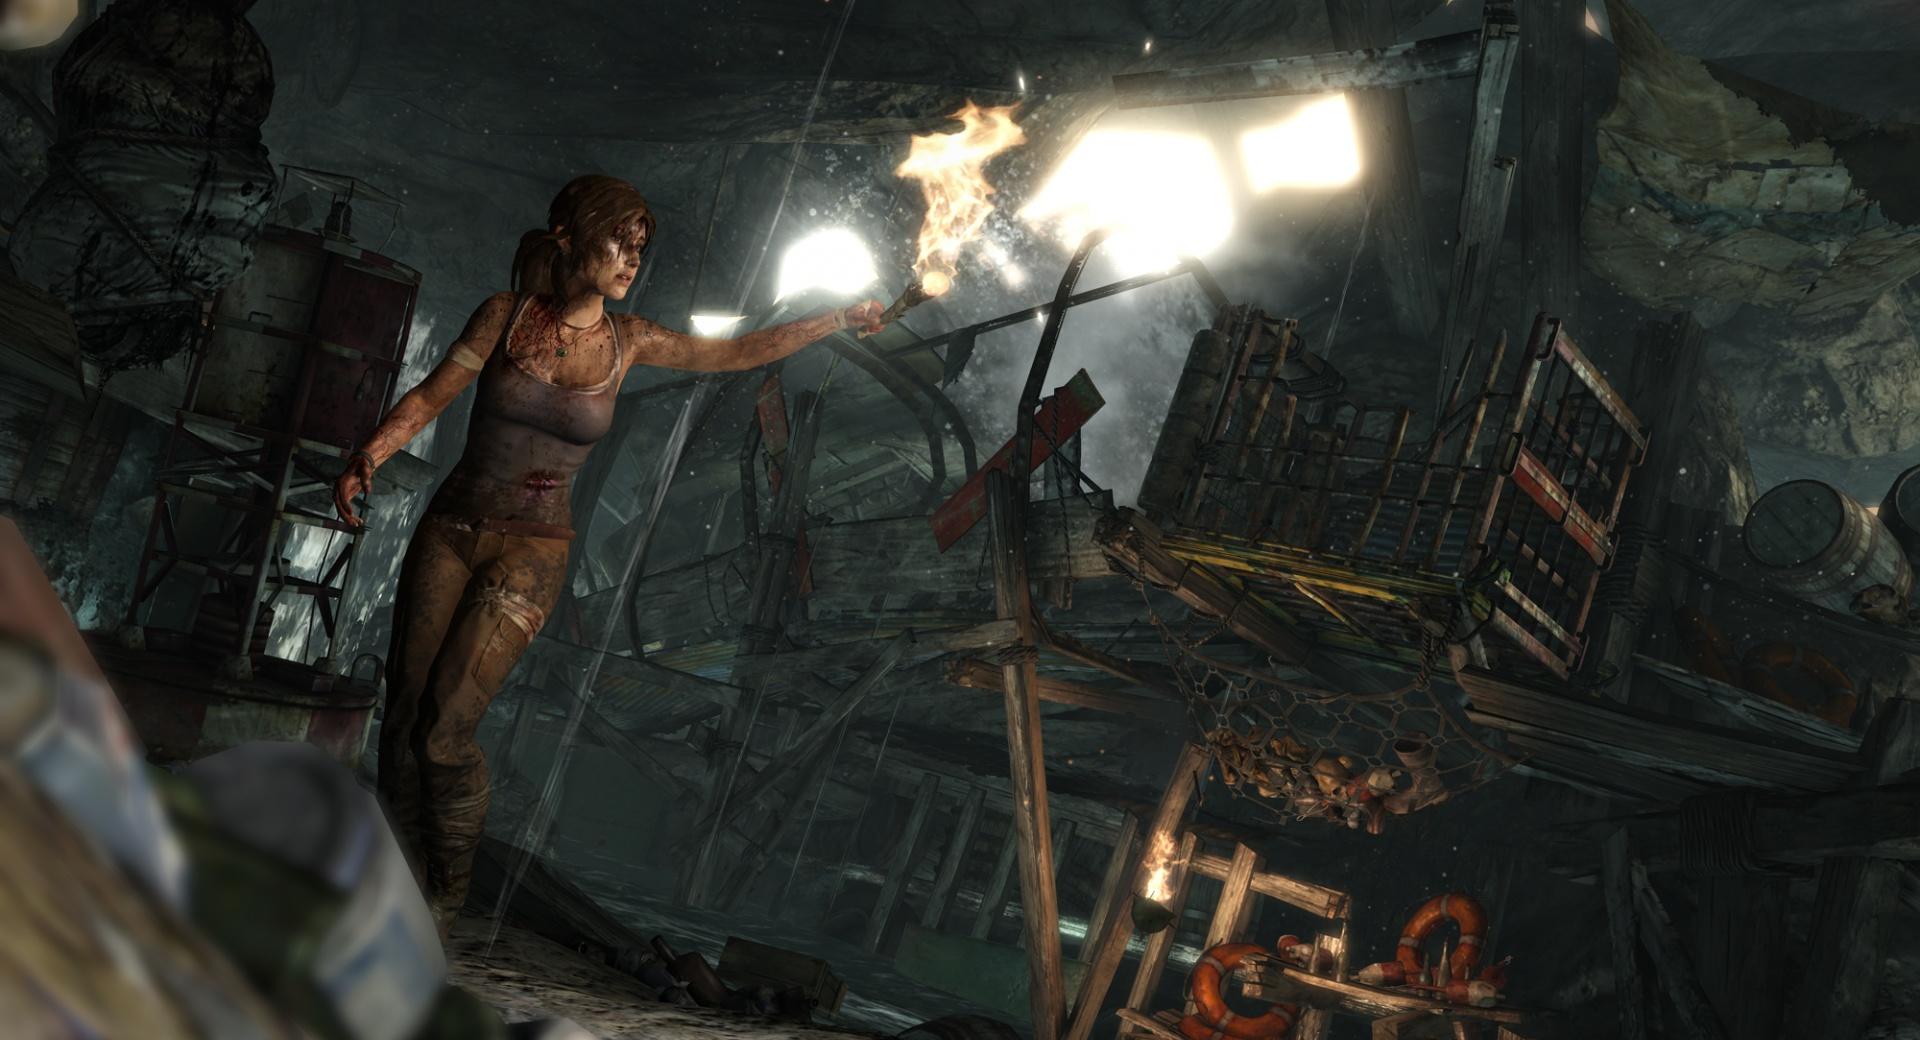 Lara Croft Survivor (2013) at 1280 x 960 size wallpapers HD quality